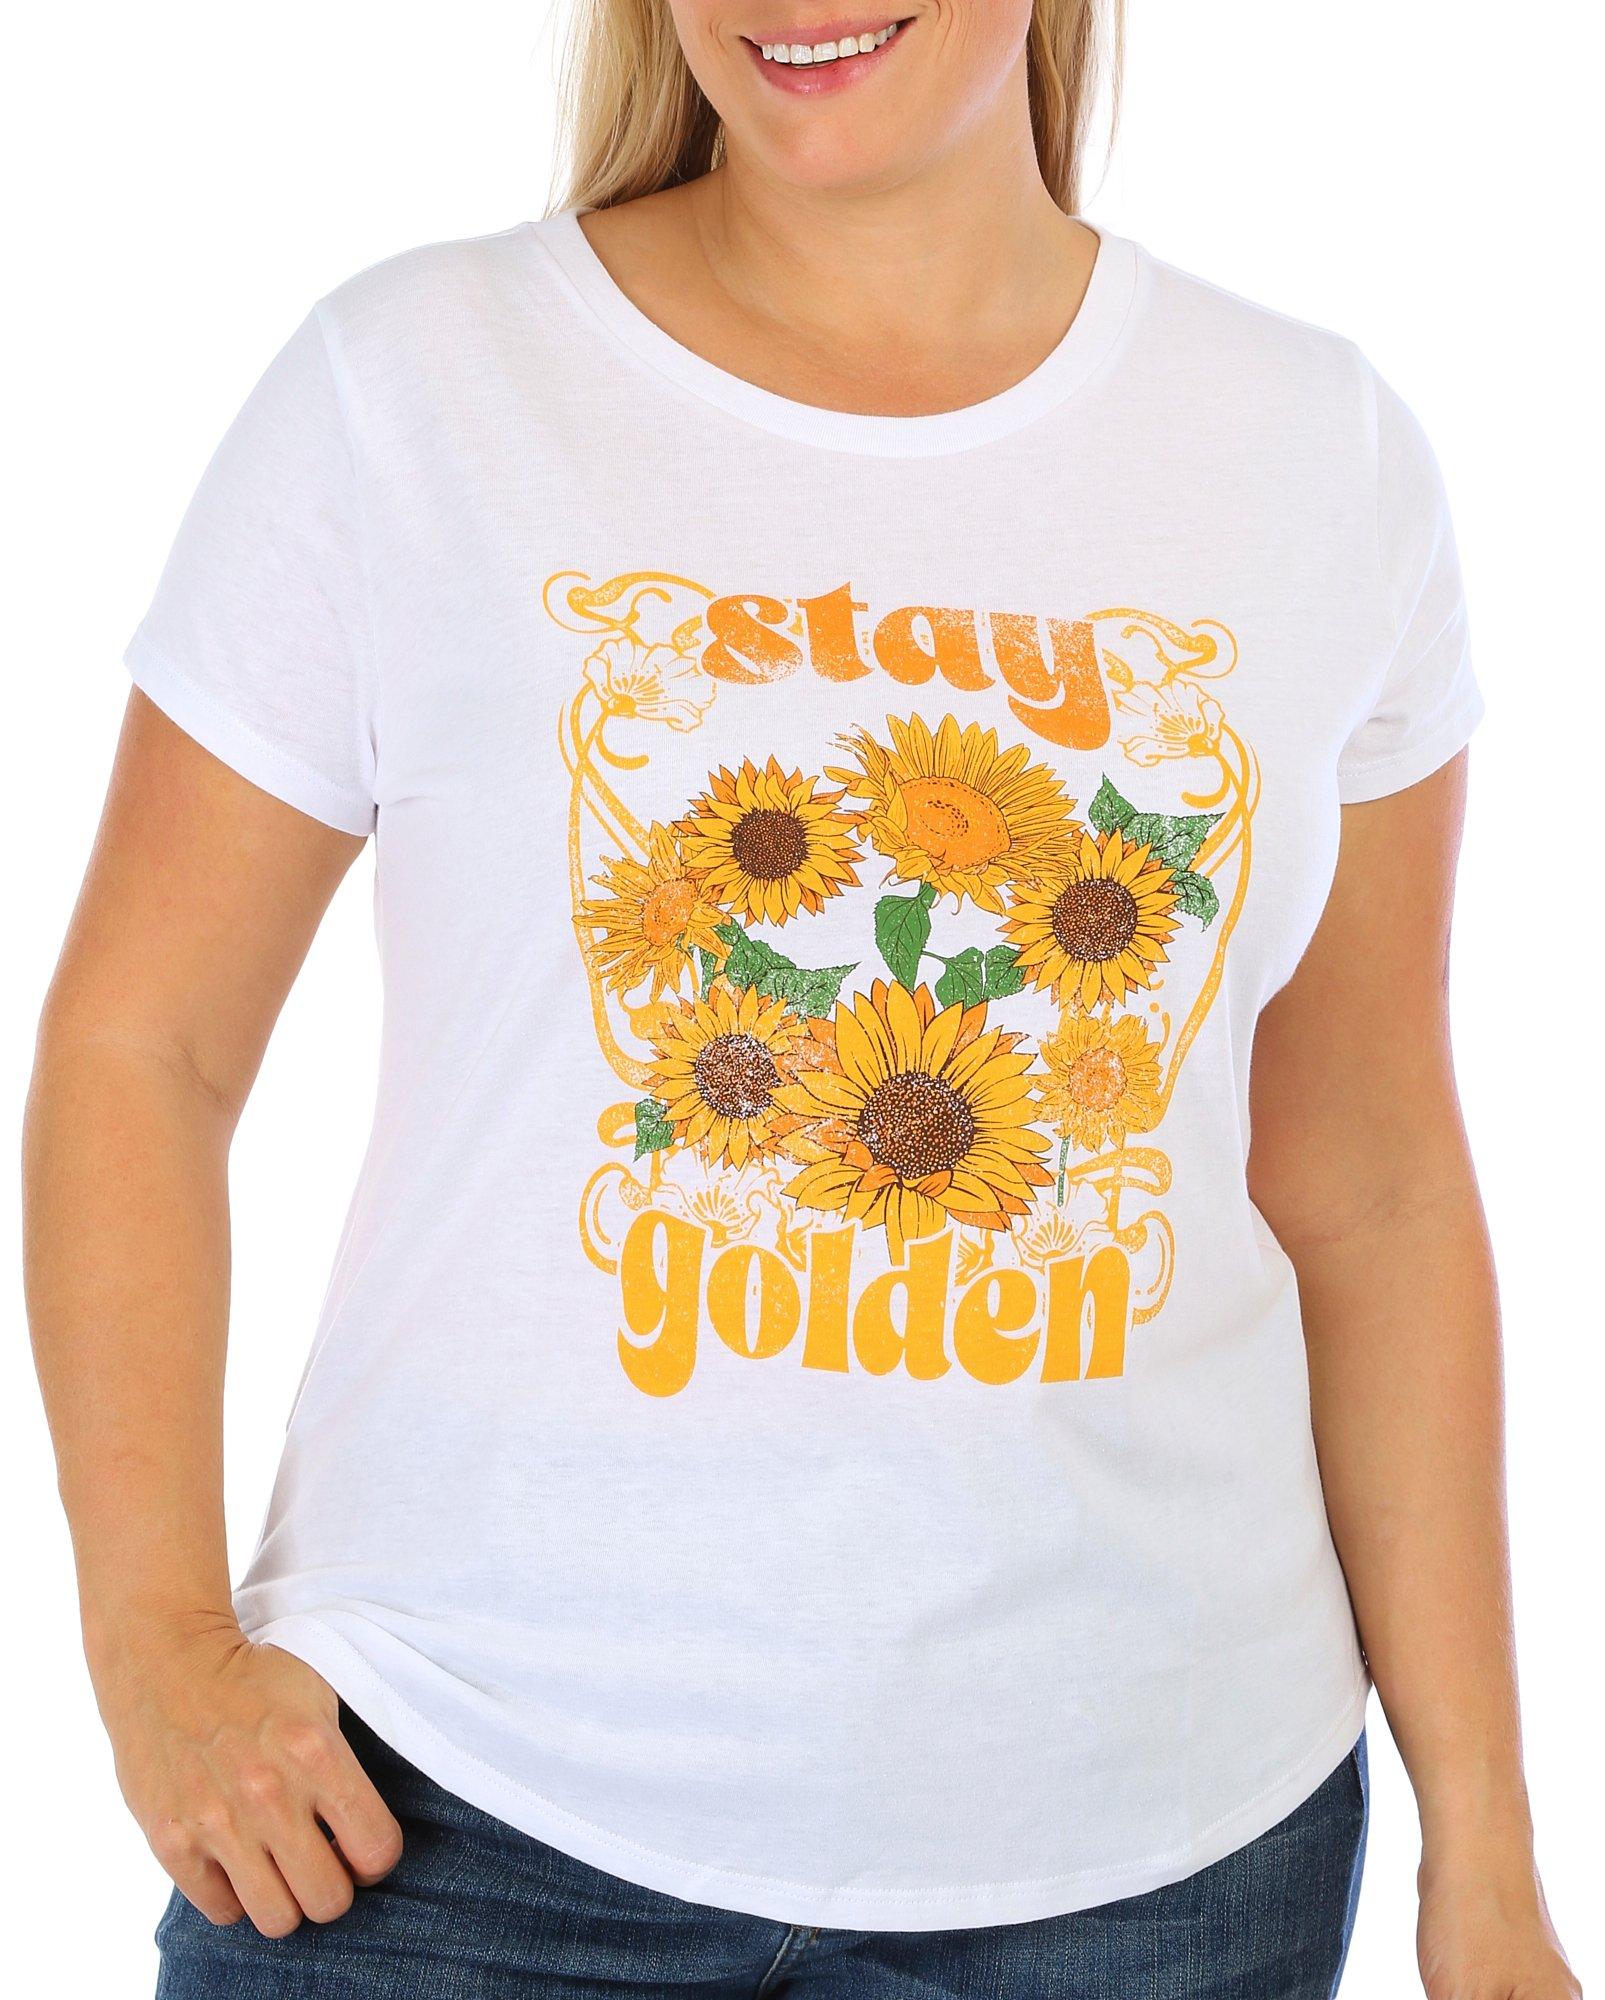 Plus Stay Golden Sunflower Short Sleeve T-Shirt